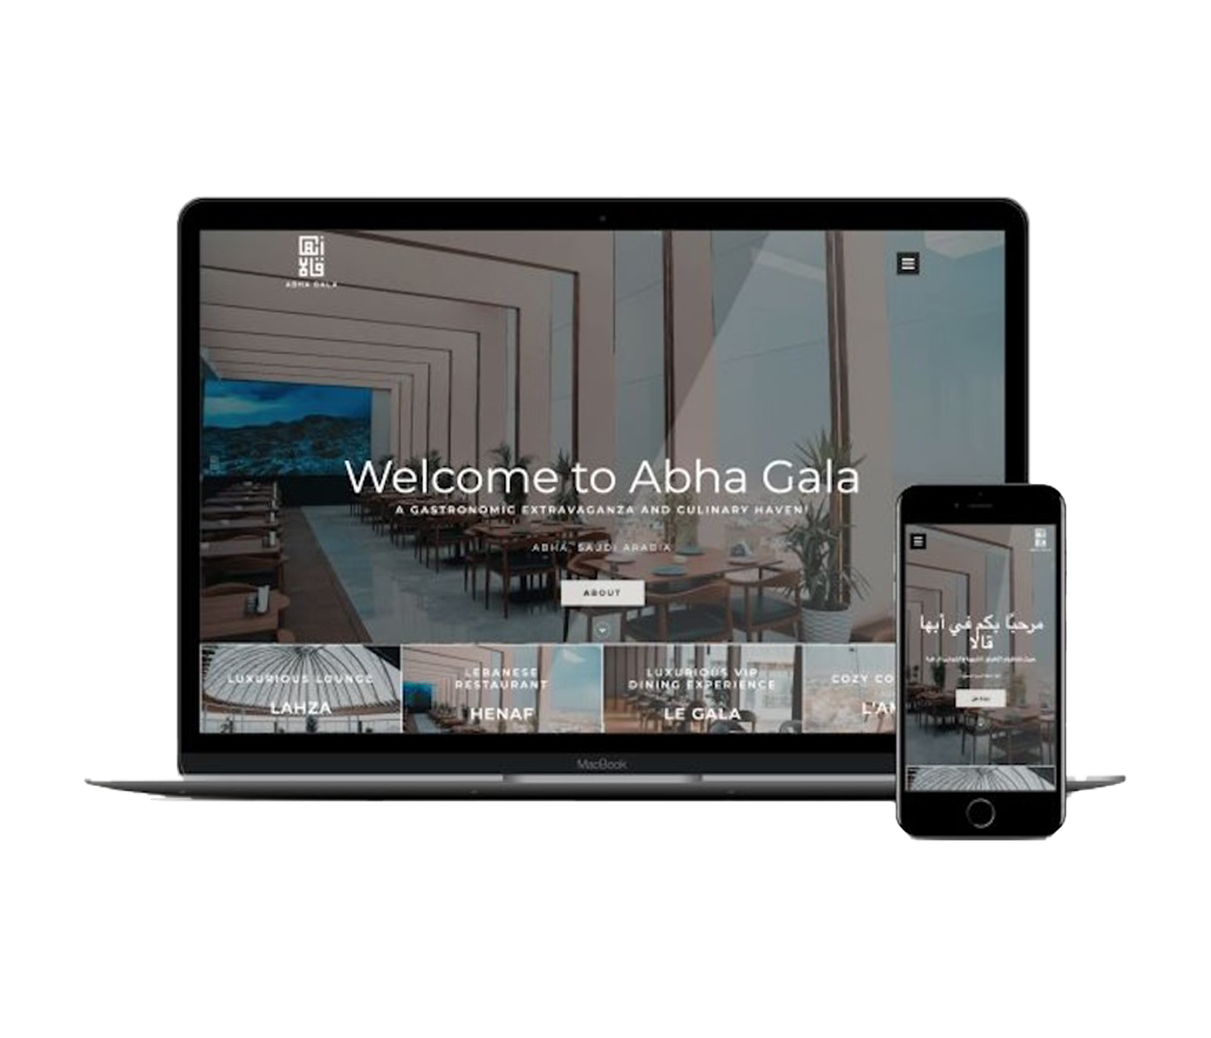 Abhagala website developed for Odindigital by Christelle Haddad